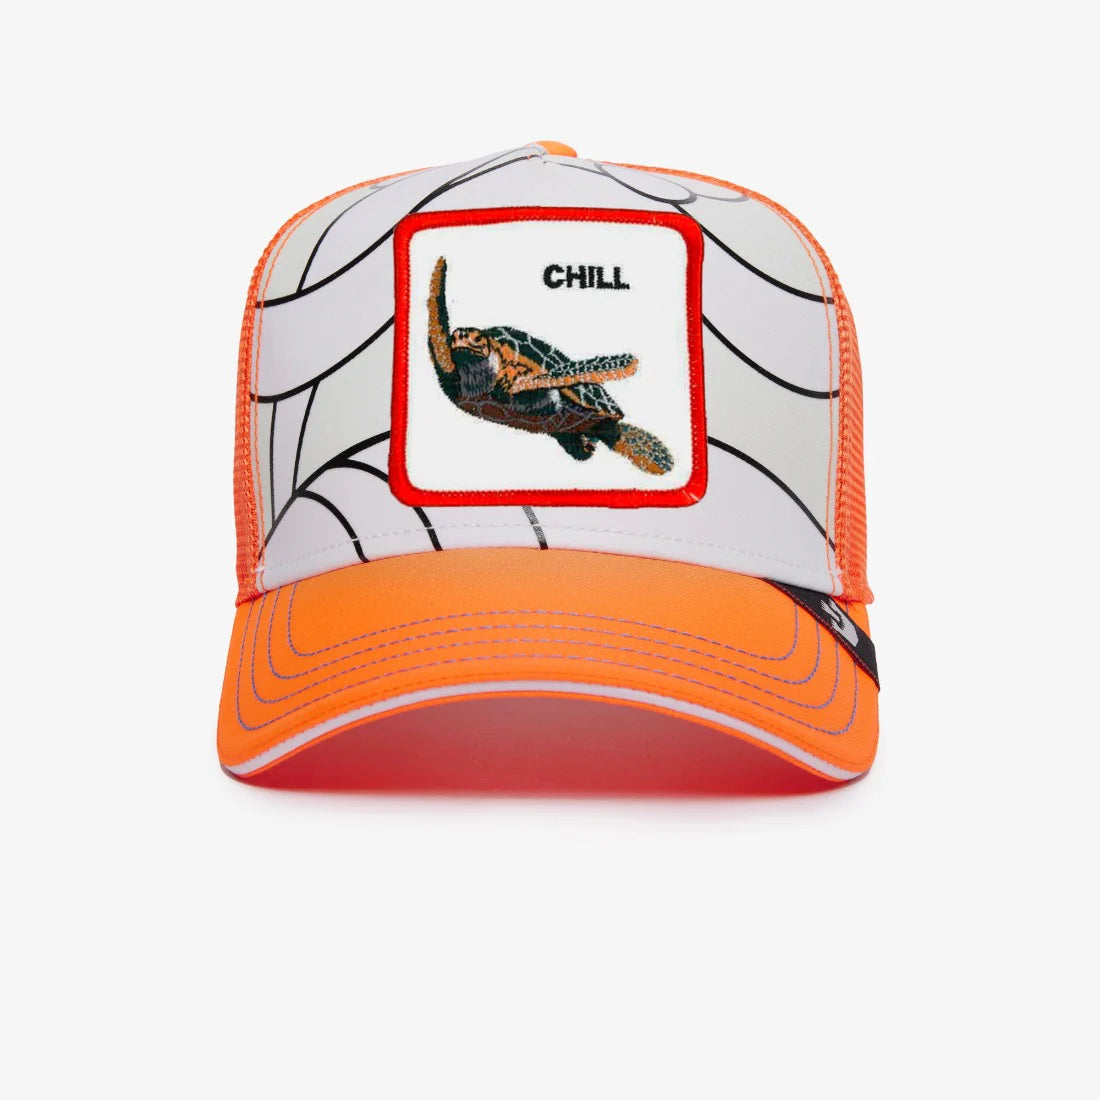 'Goorin Bros. 2 Crush 2 Furious Trucker Hat' in 'Orange' colour